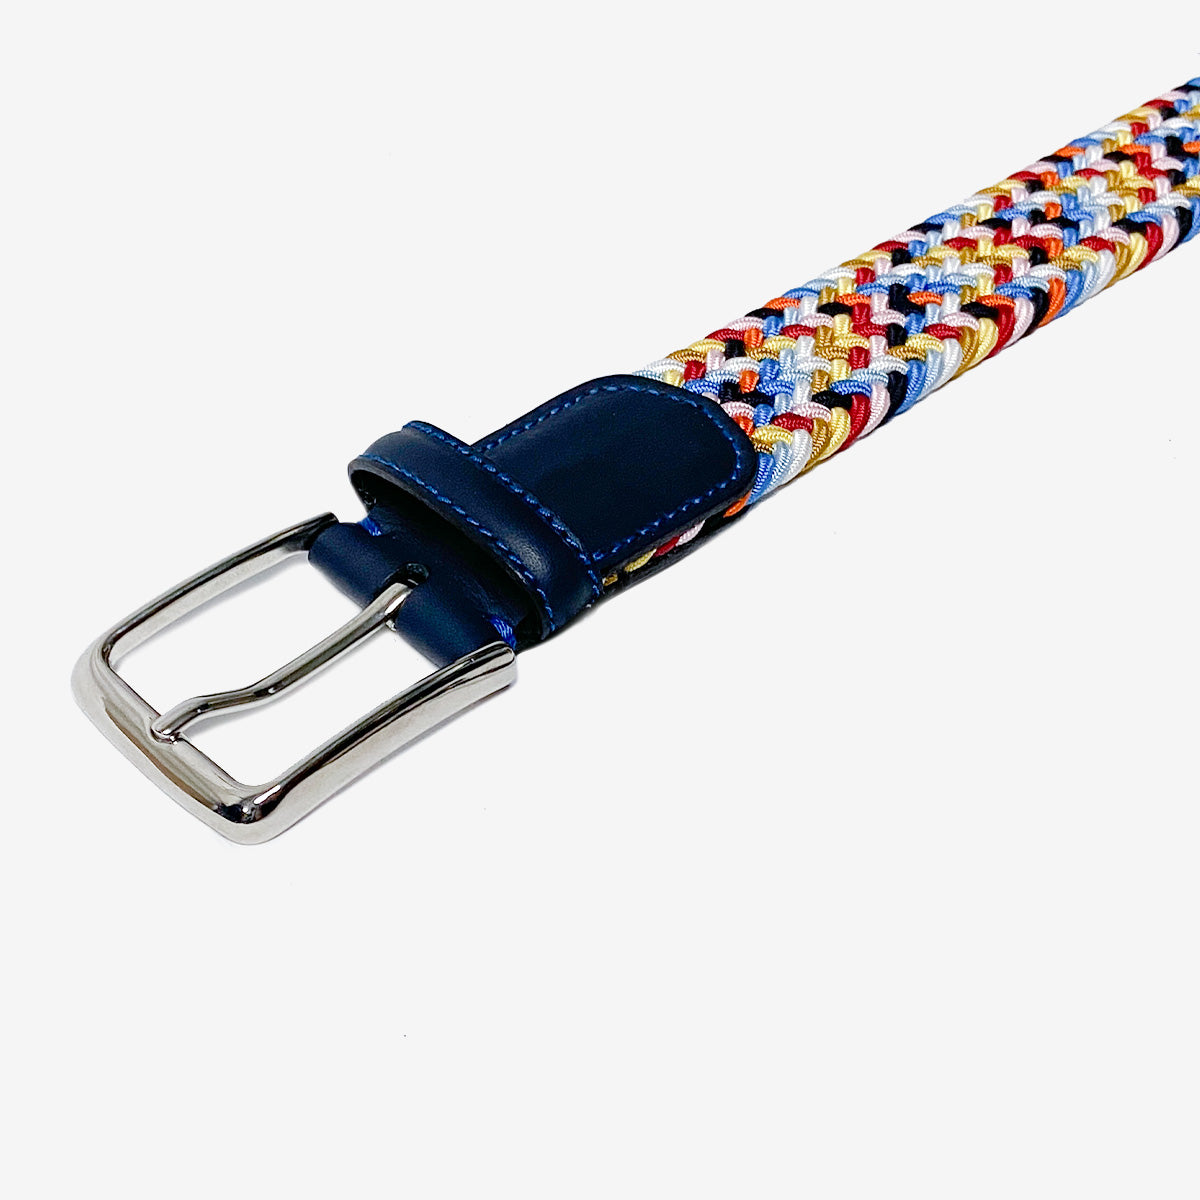 Woven elasticated belt multicolor